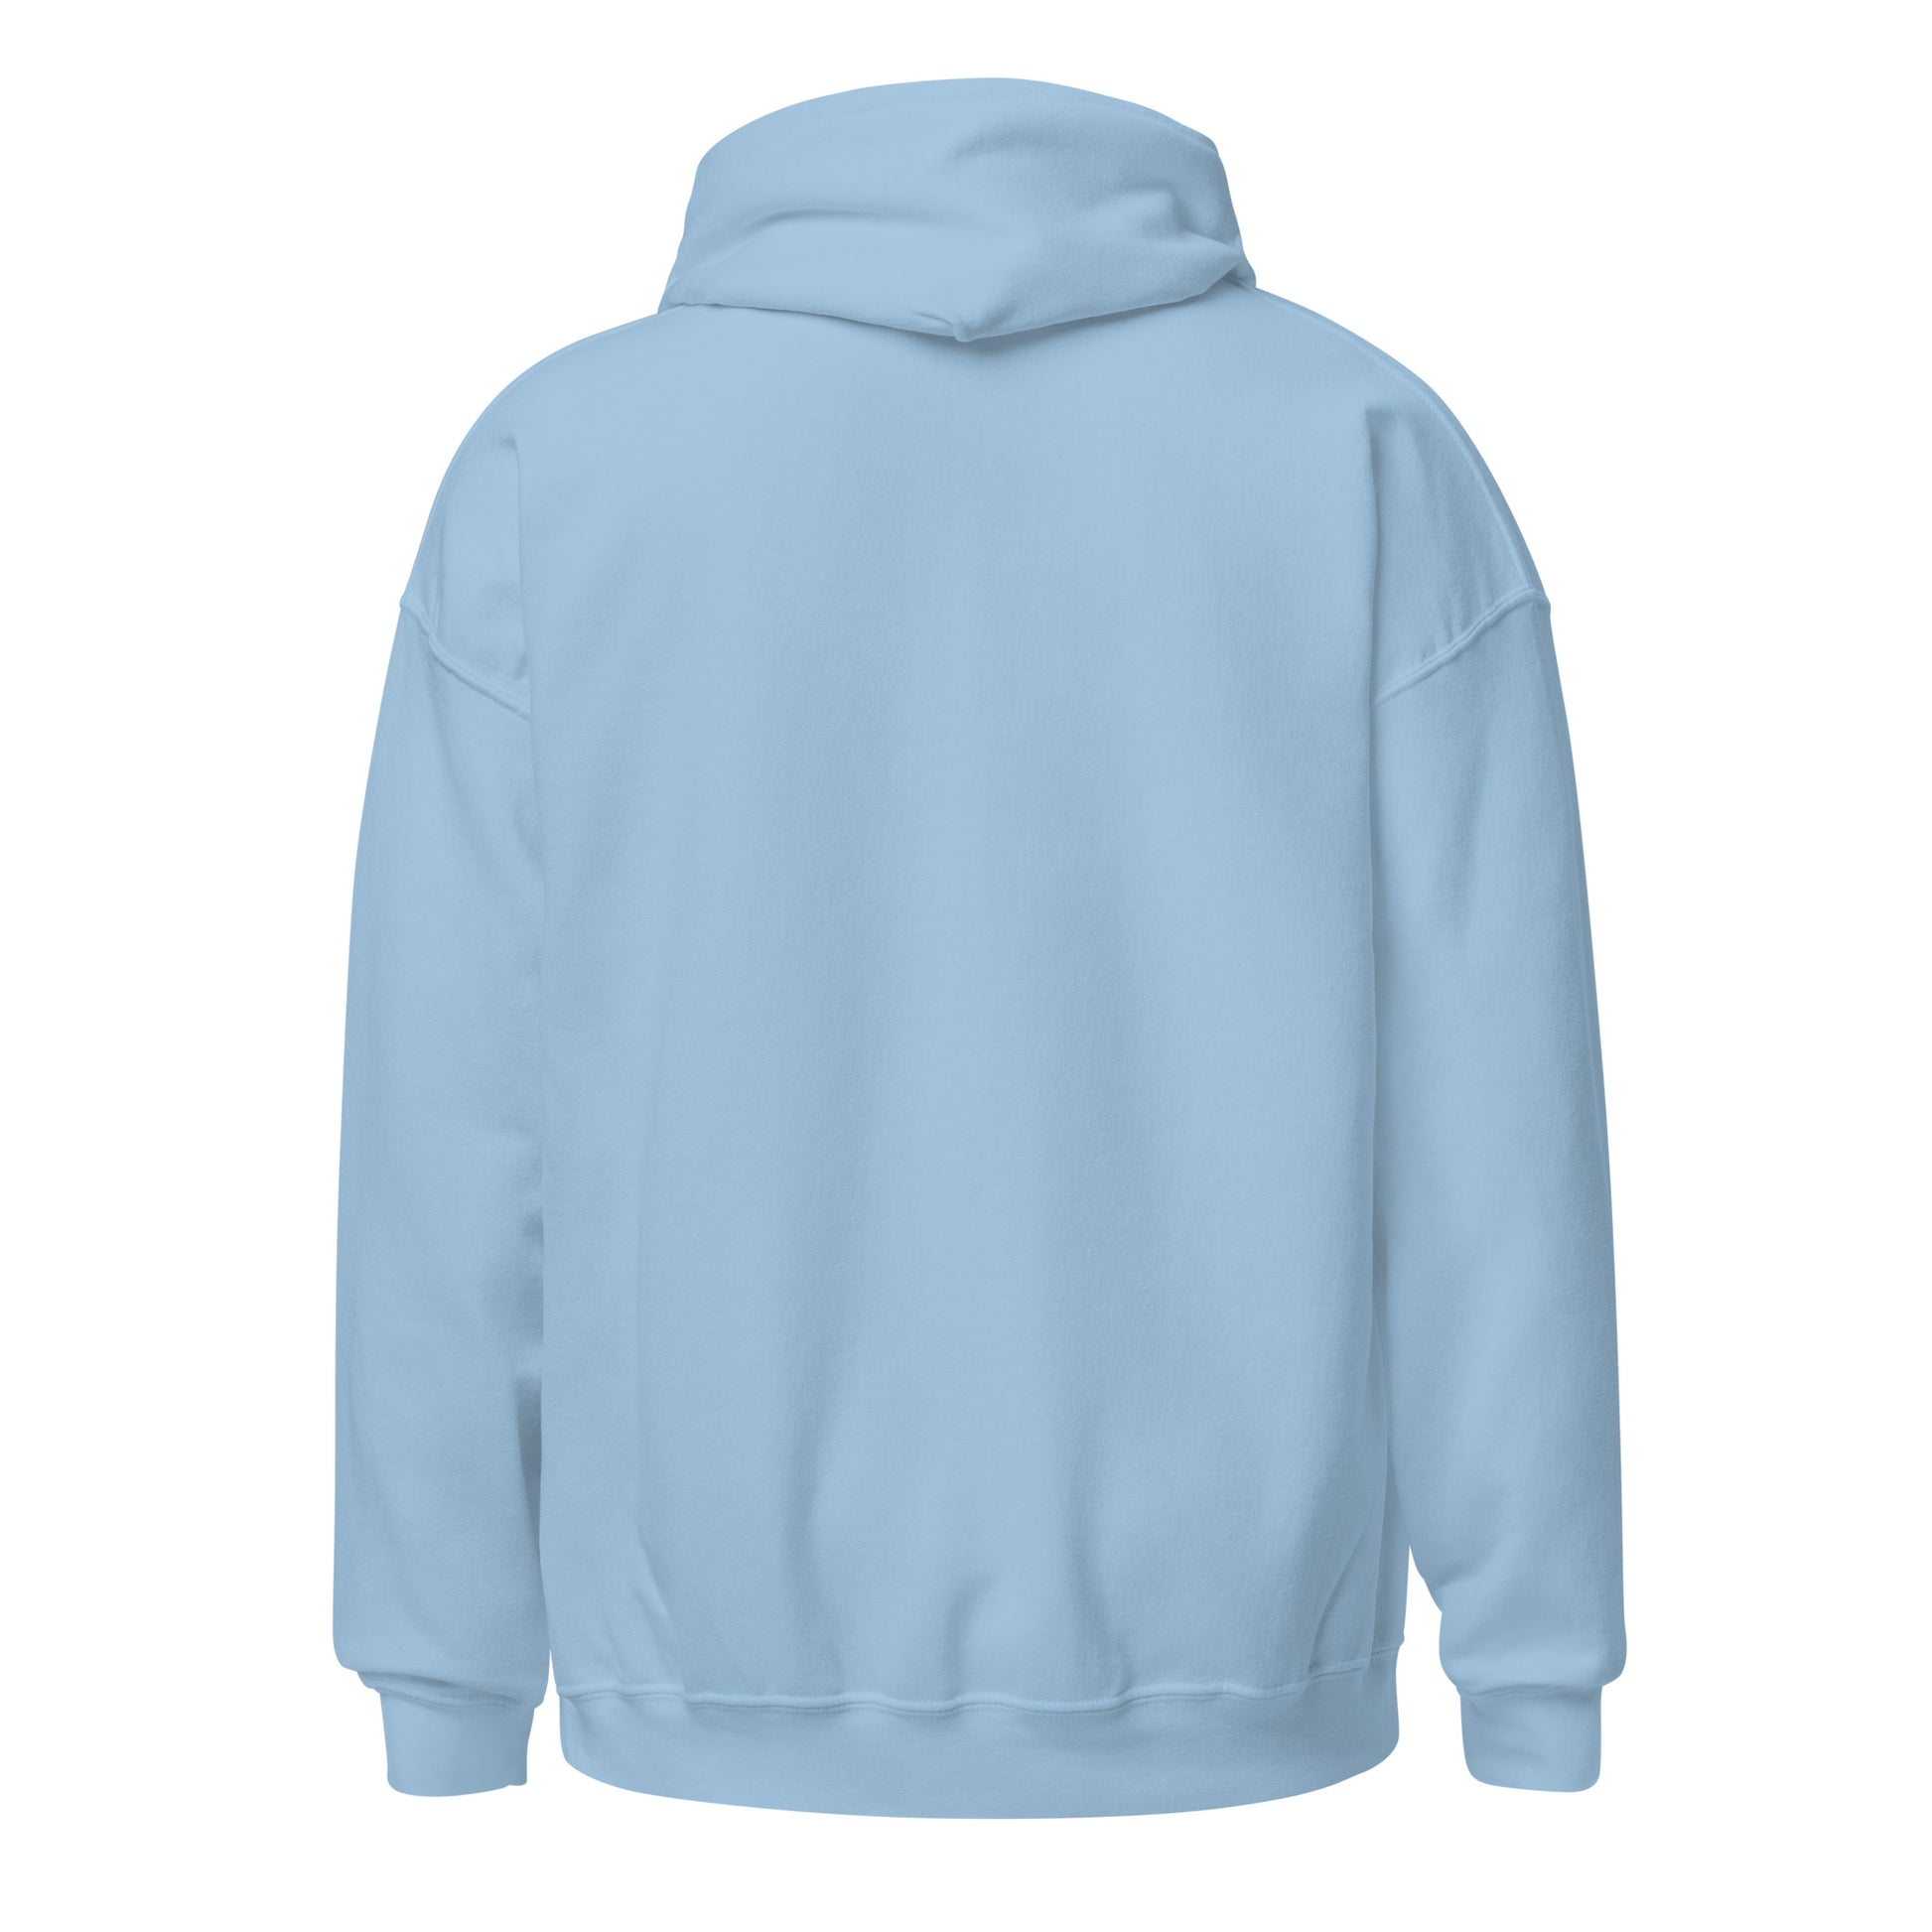 Unisex SPARS Light Blue basic logo hoodie - back placement